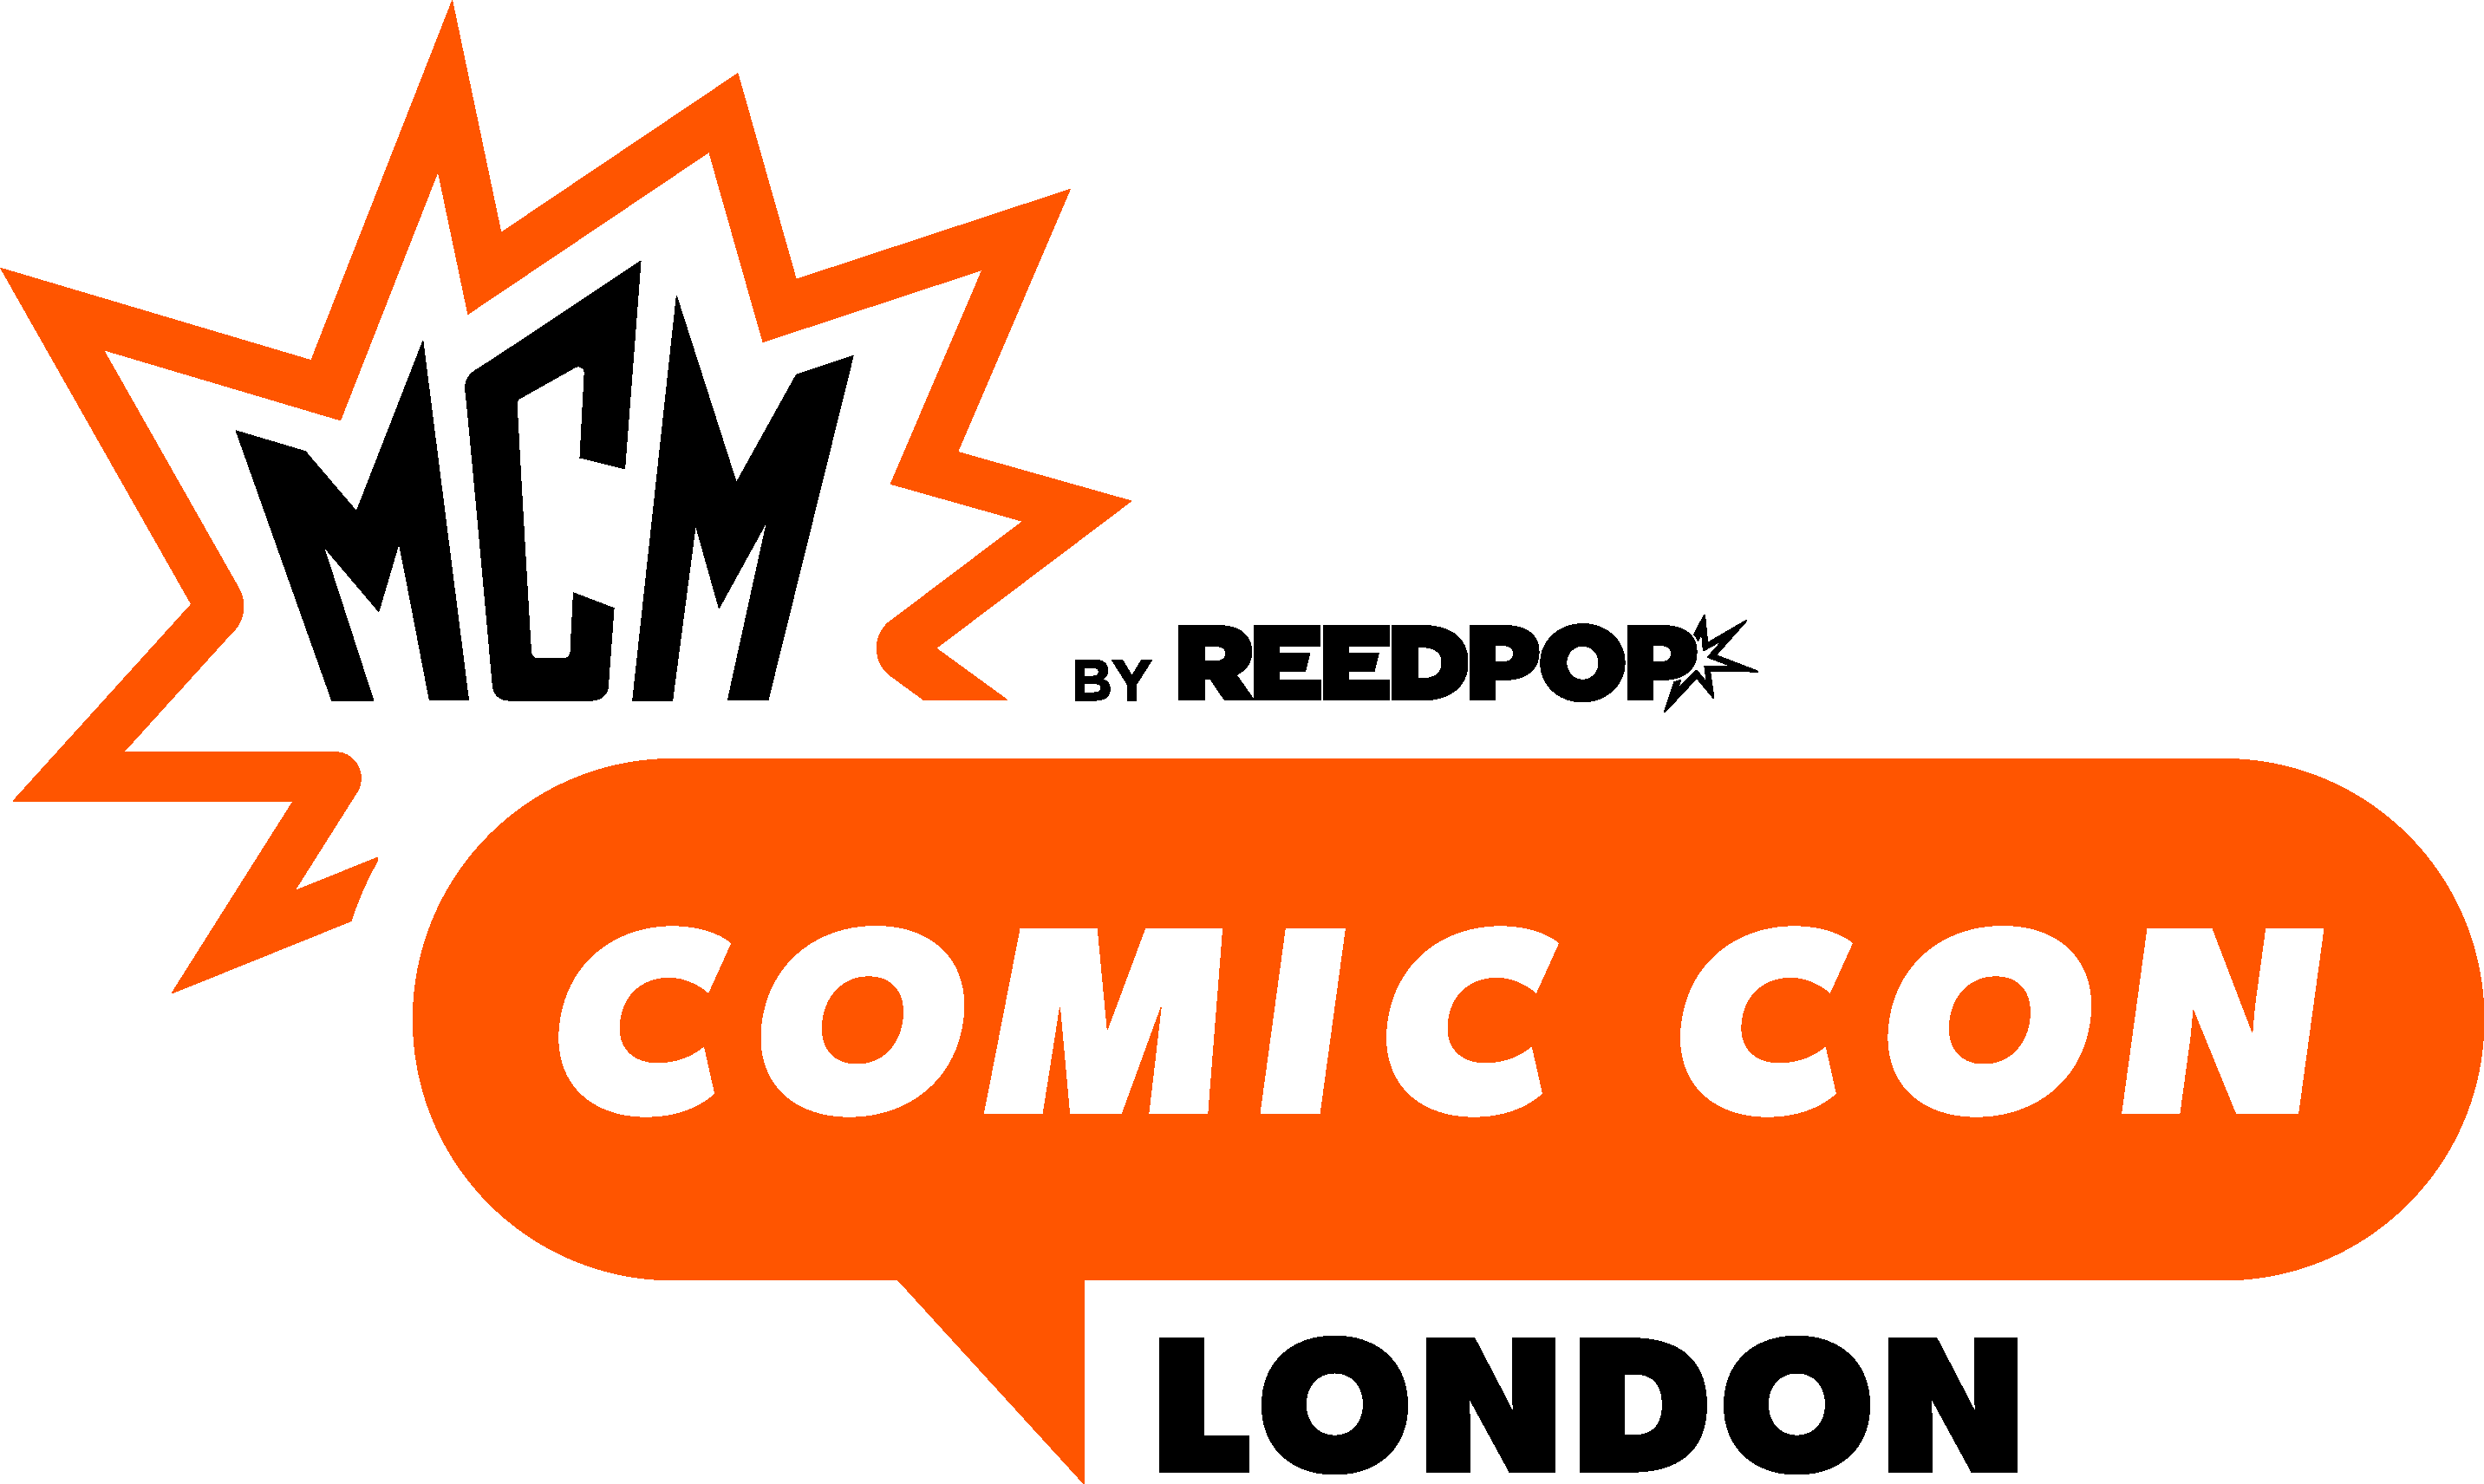 MCM Comic Con London May 2024